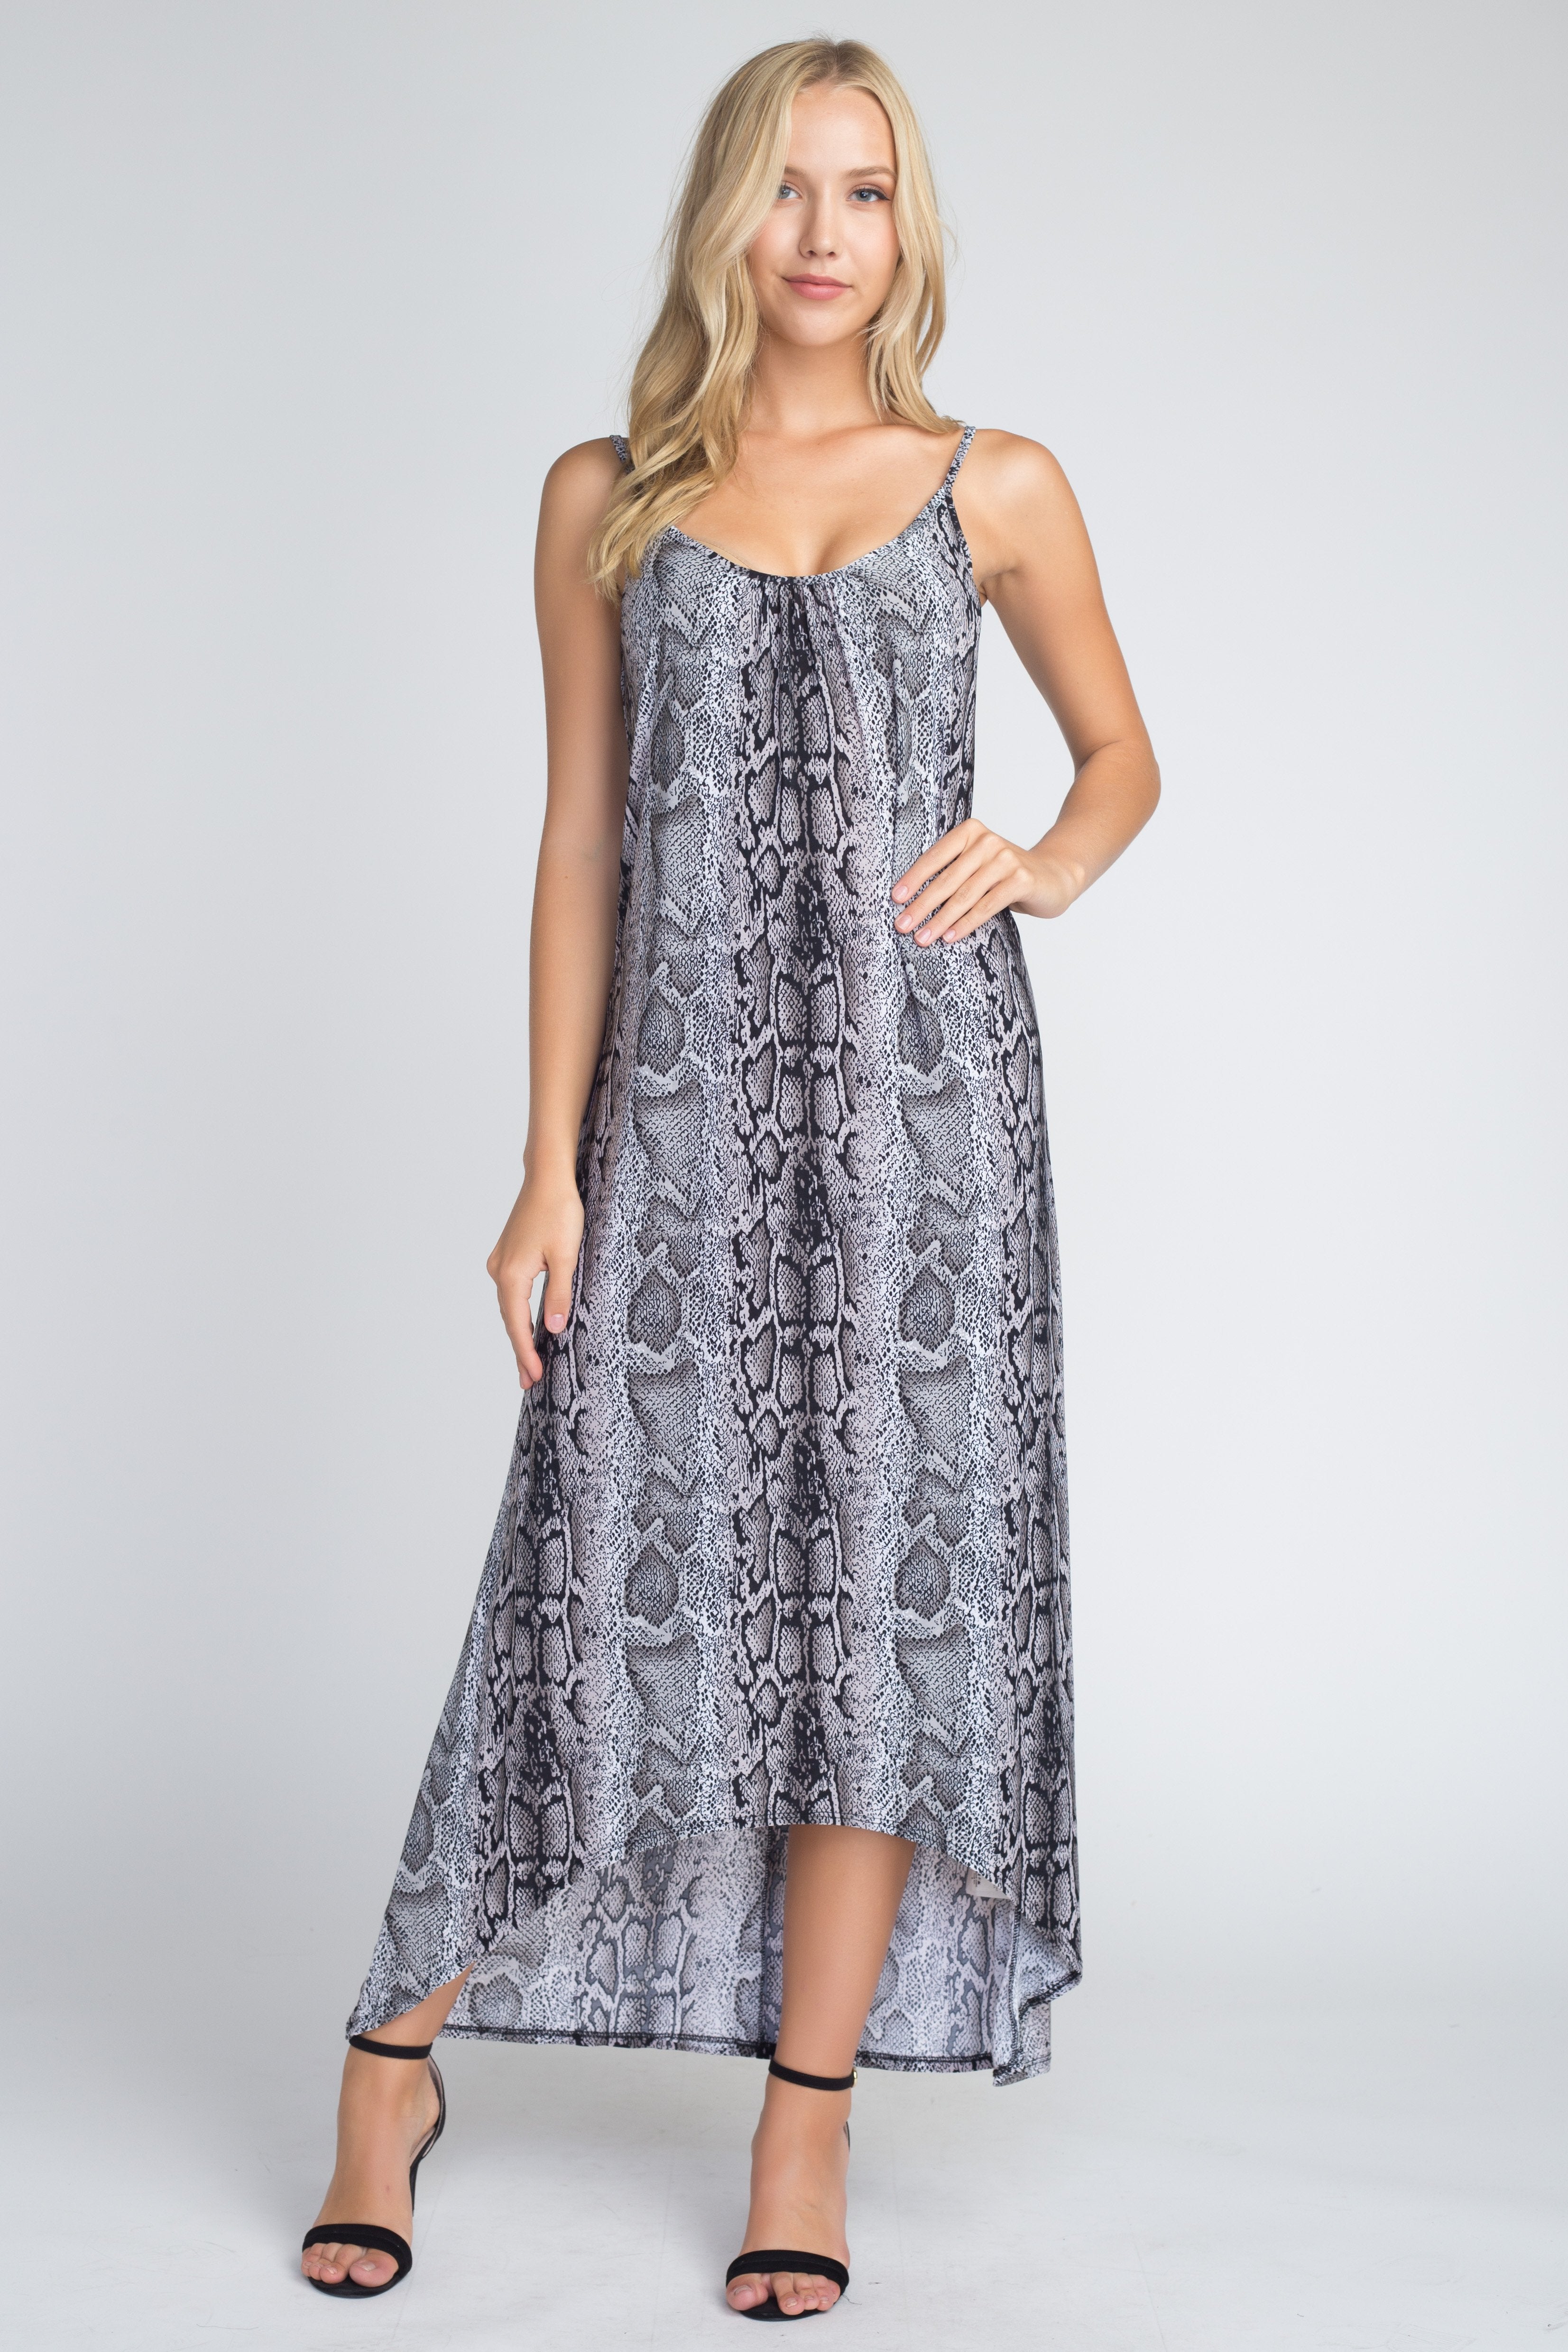 Women's Snakeskin Print Maxi Tank Dress - Shop Luxurious57